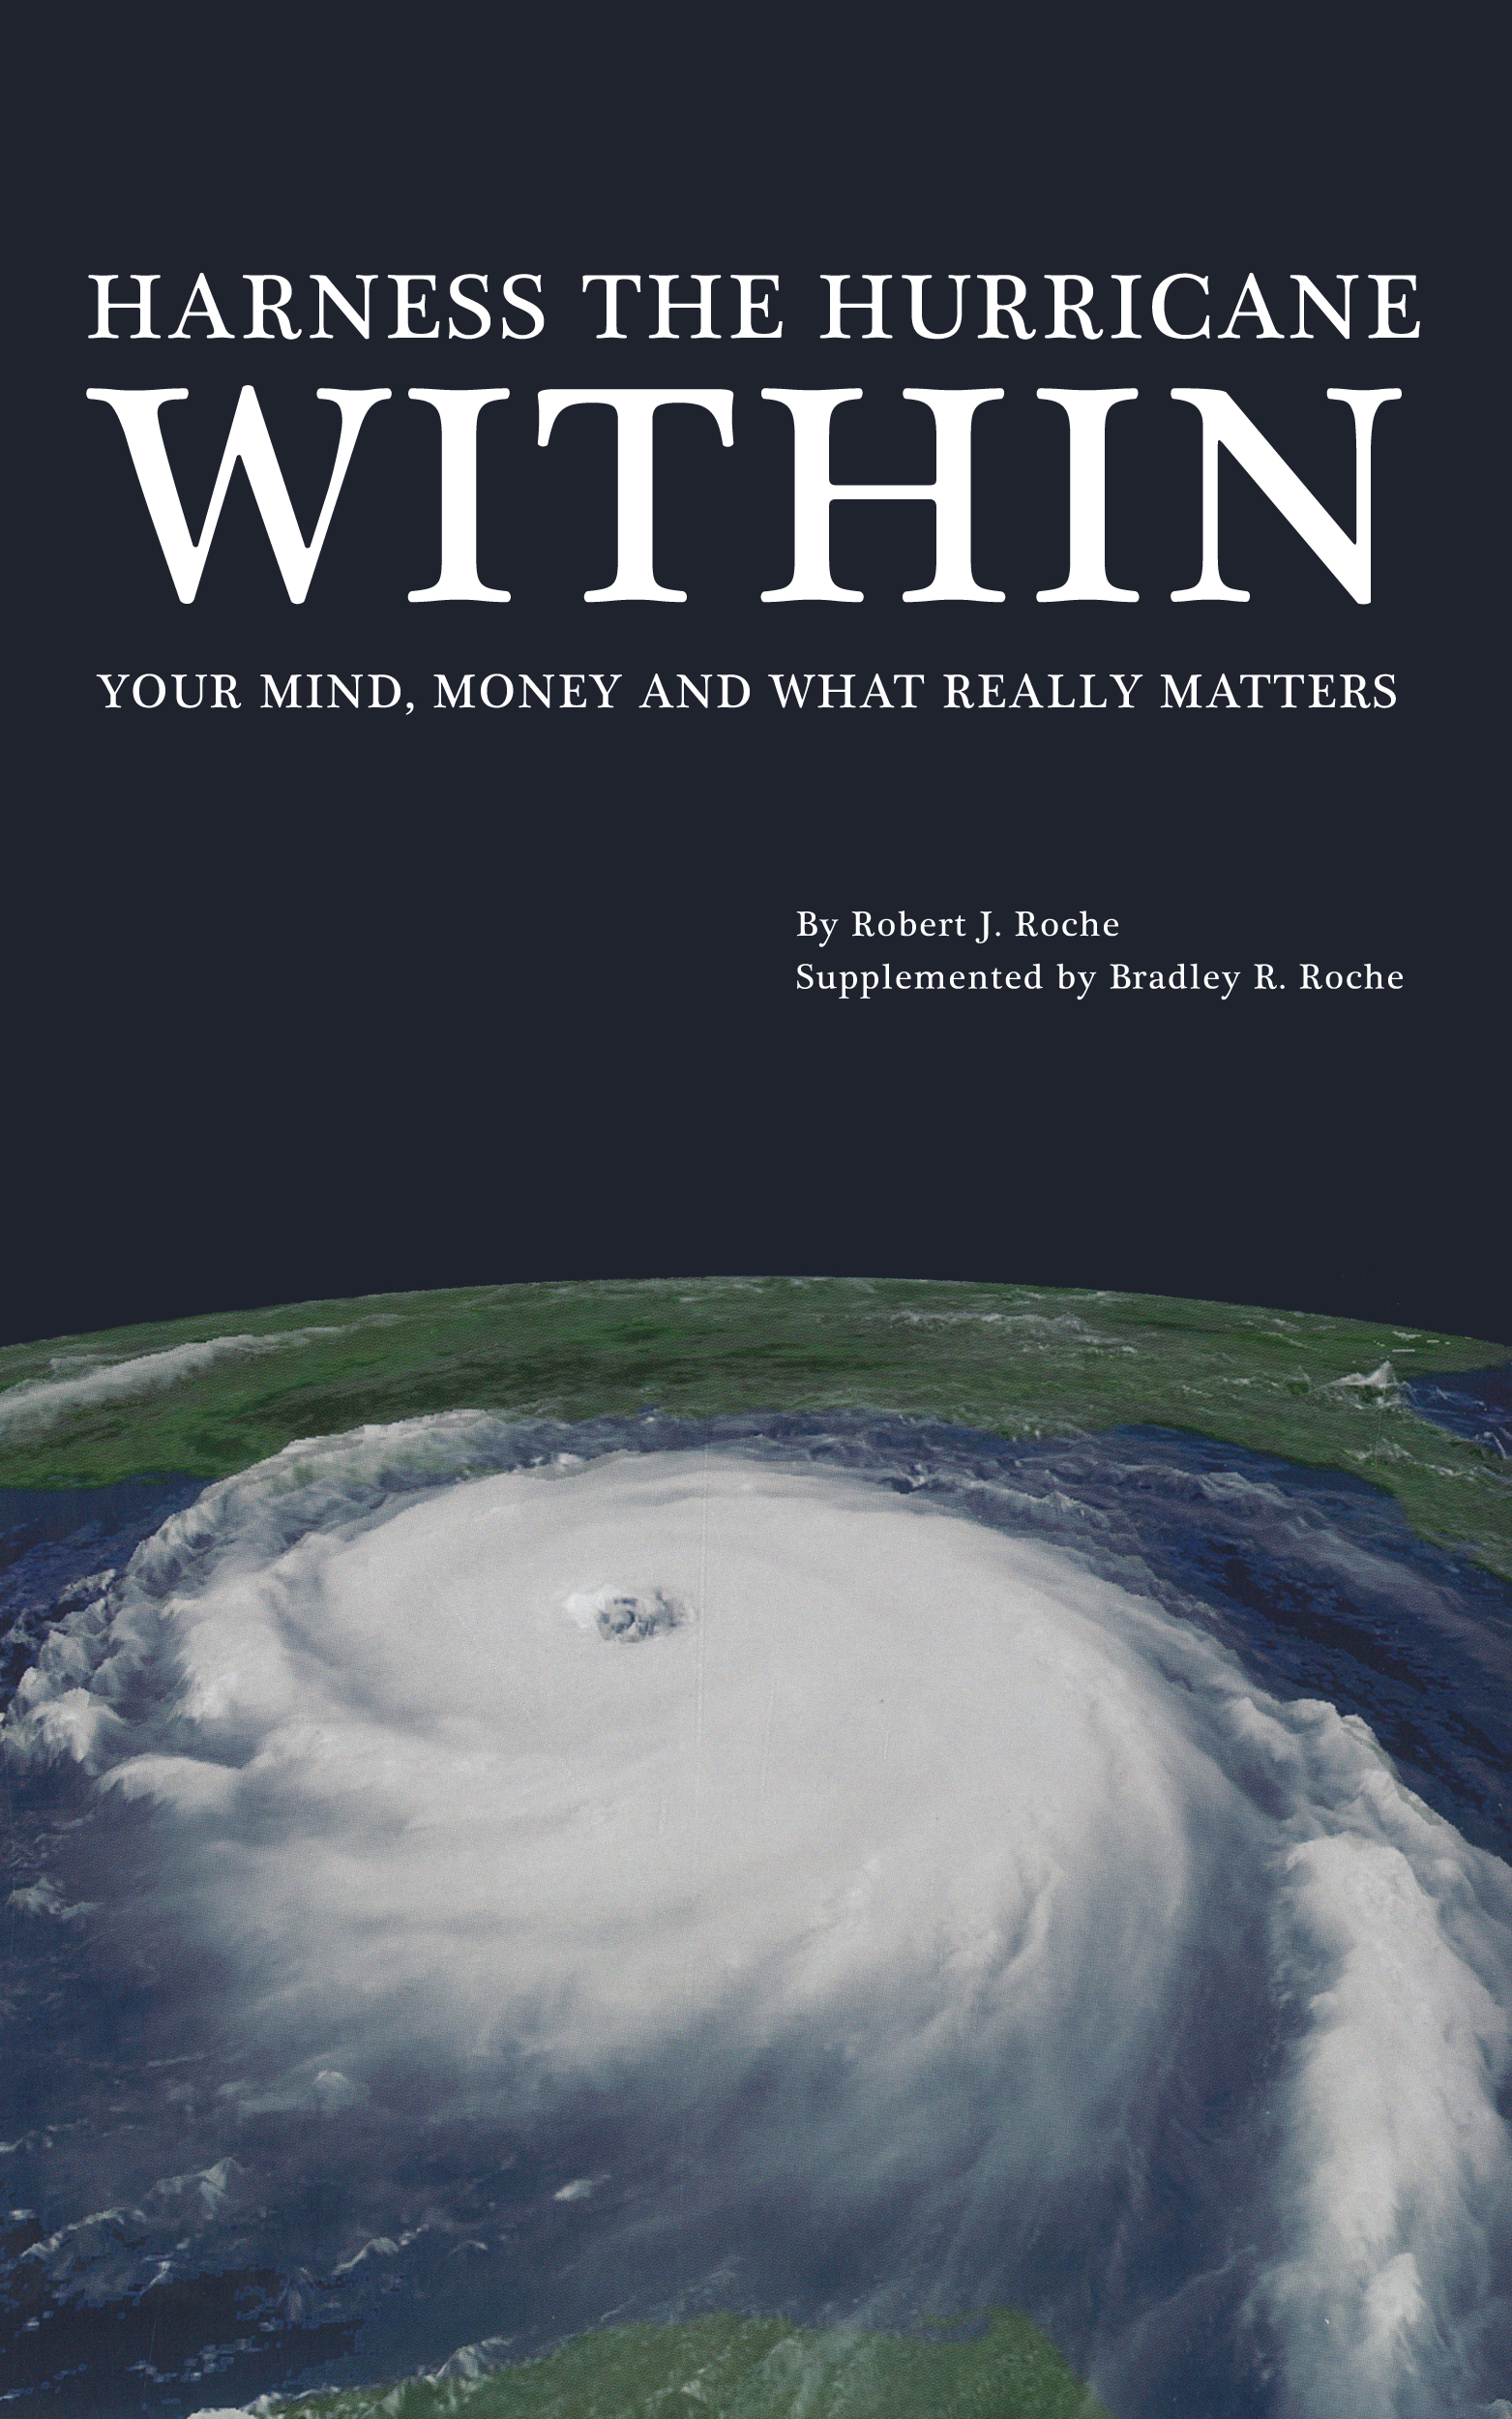 Harness The Hurricane Final Kindle Cover 10 05 2015.jpg